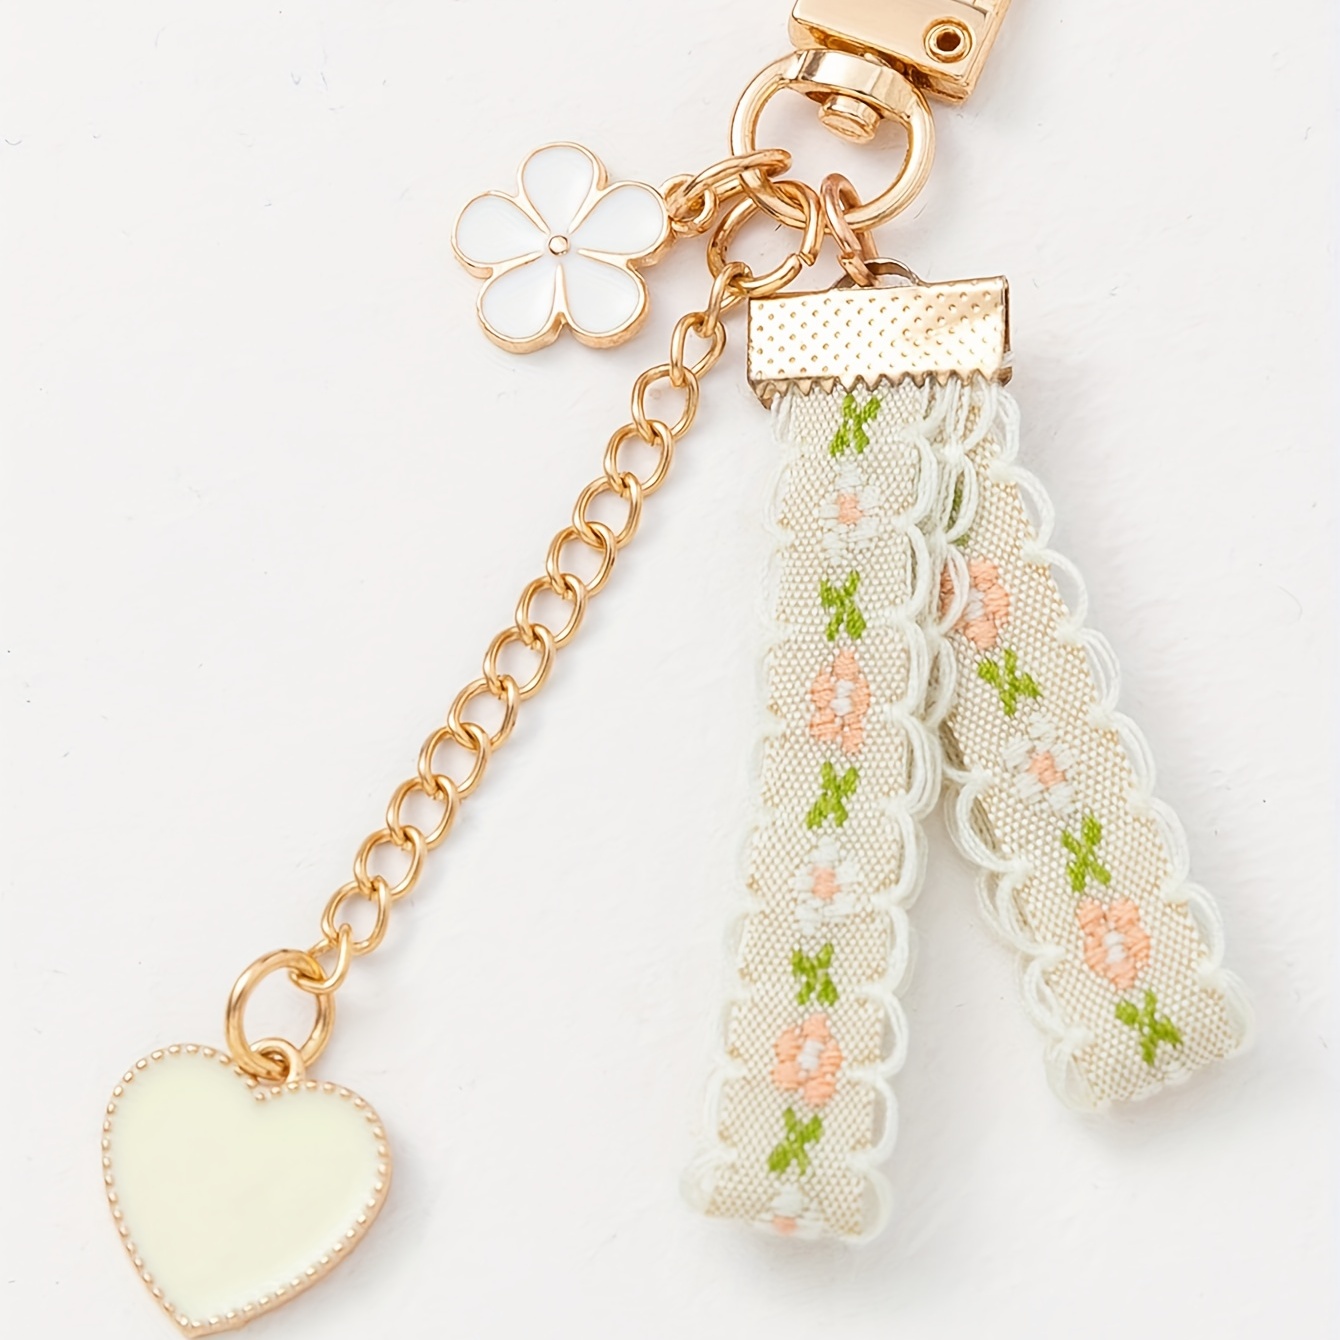 Fabric Flower Key Chain, Key Ring Accessories